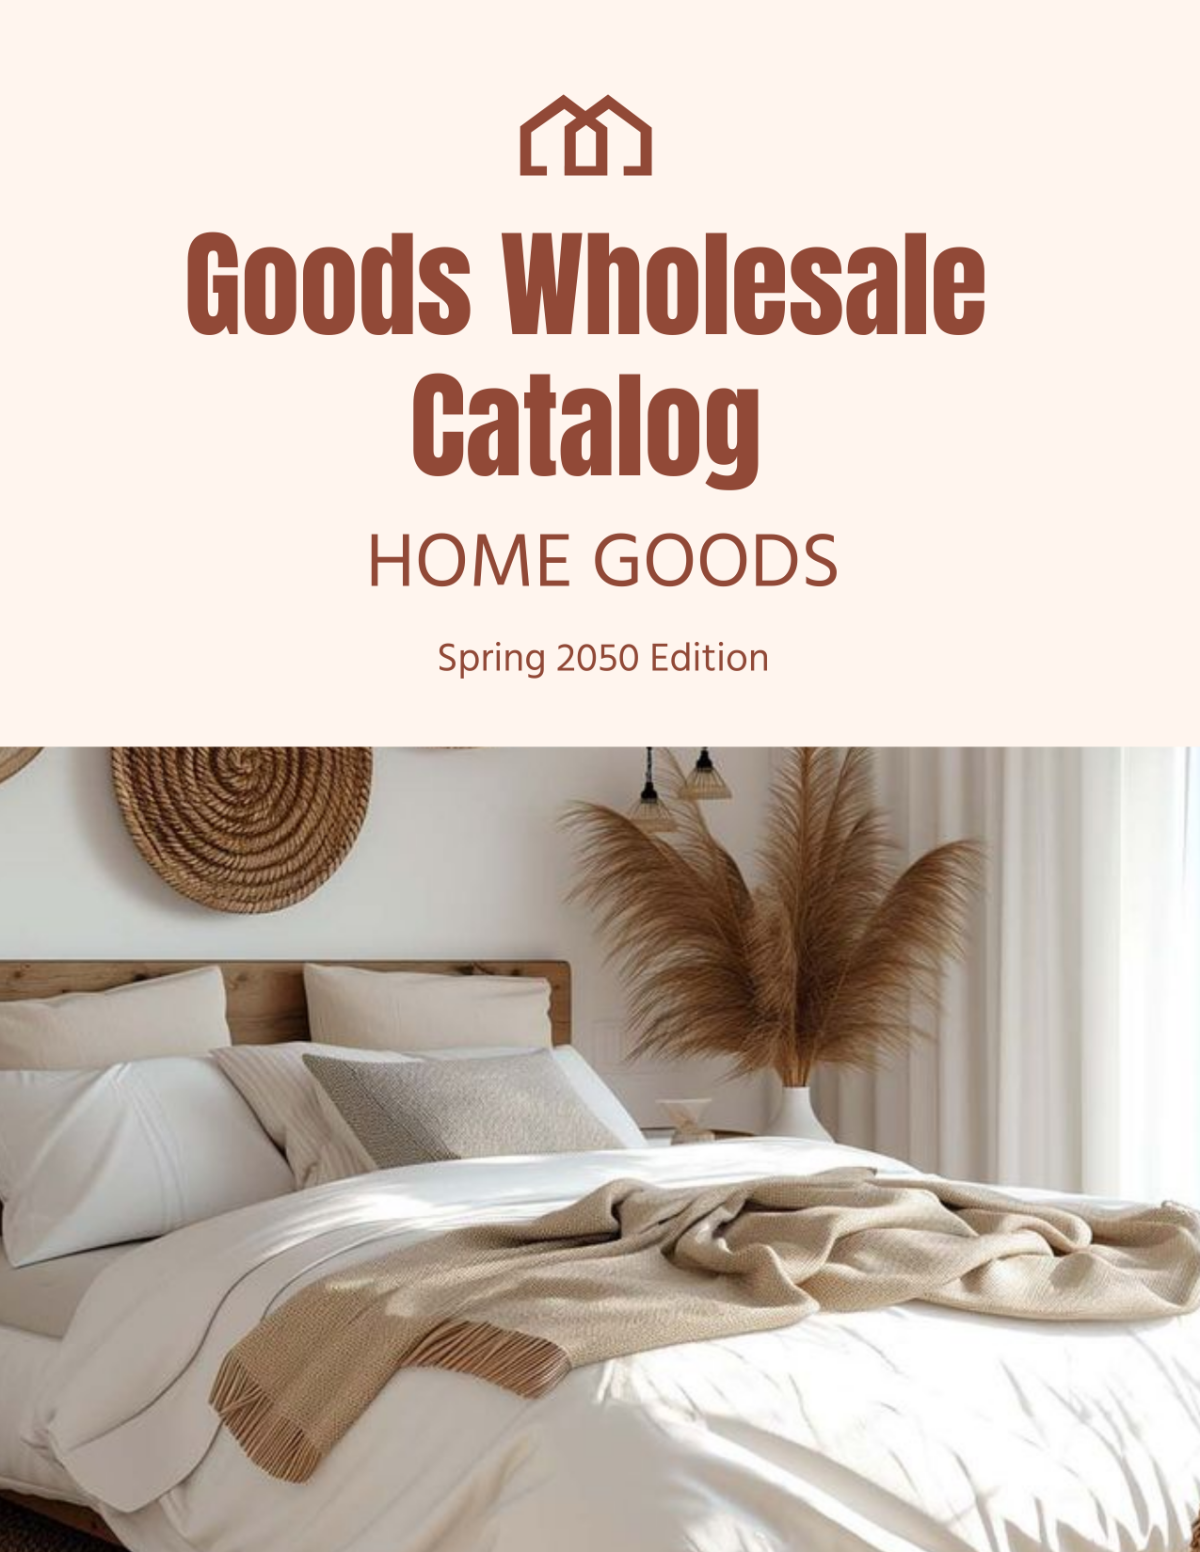 Goods Wholesale Catalog